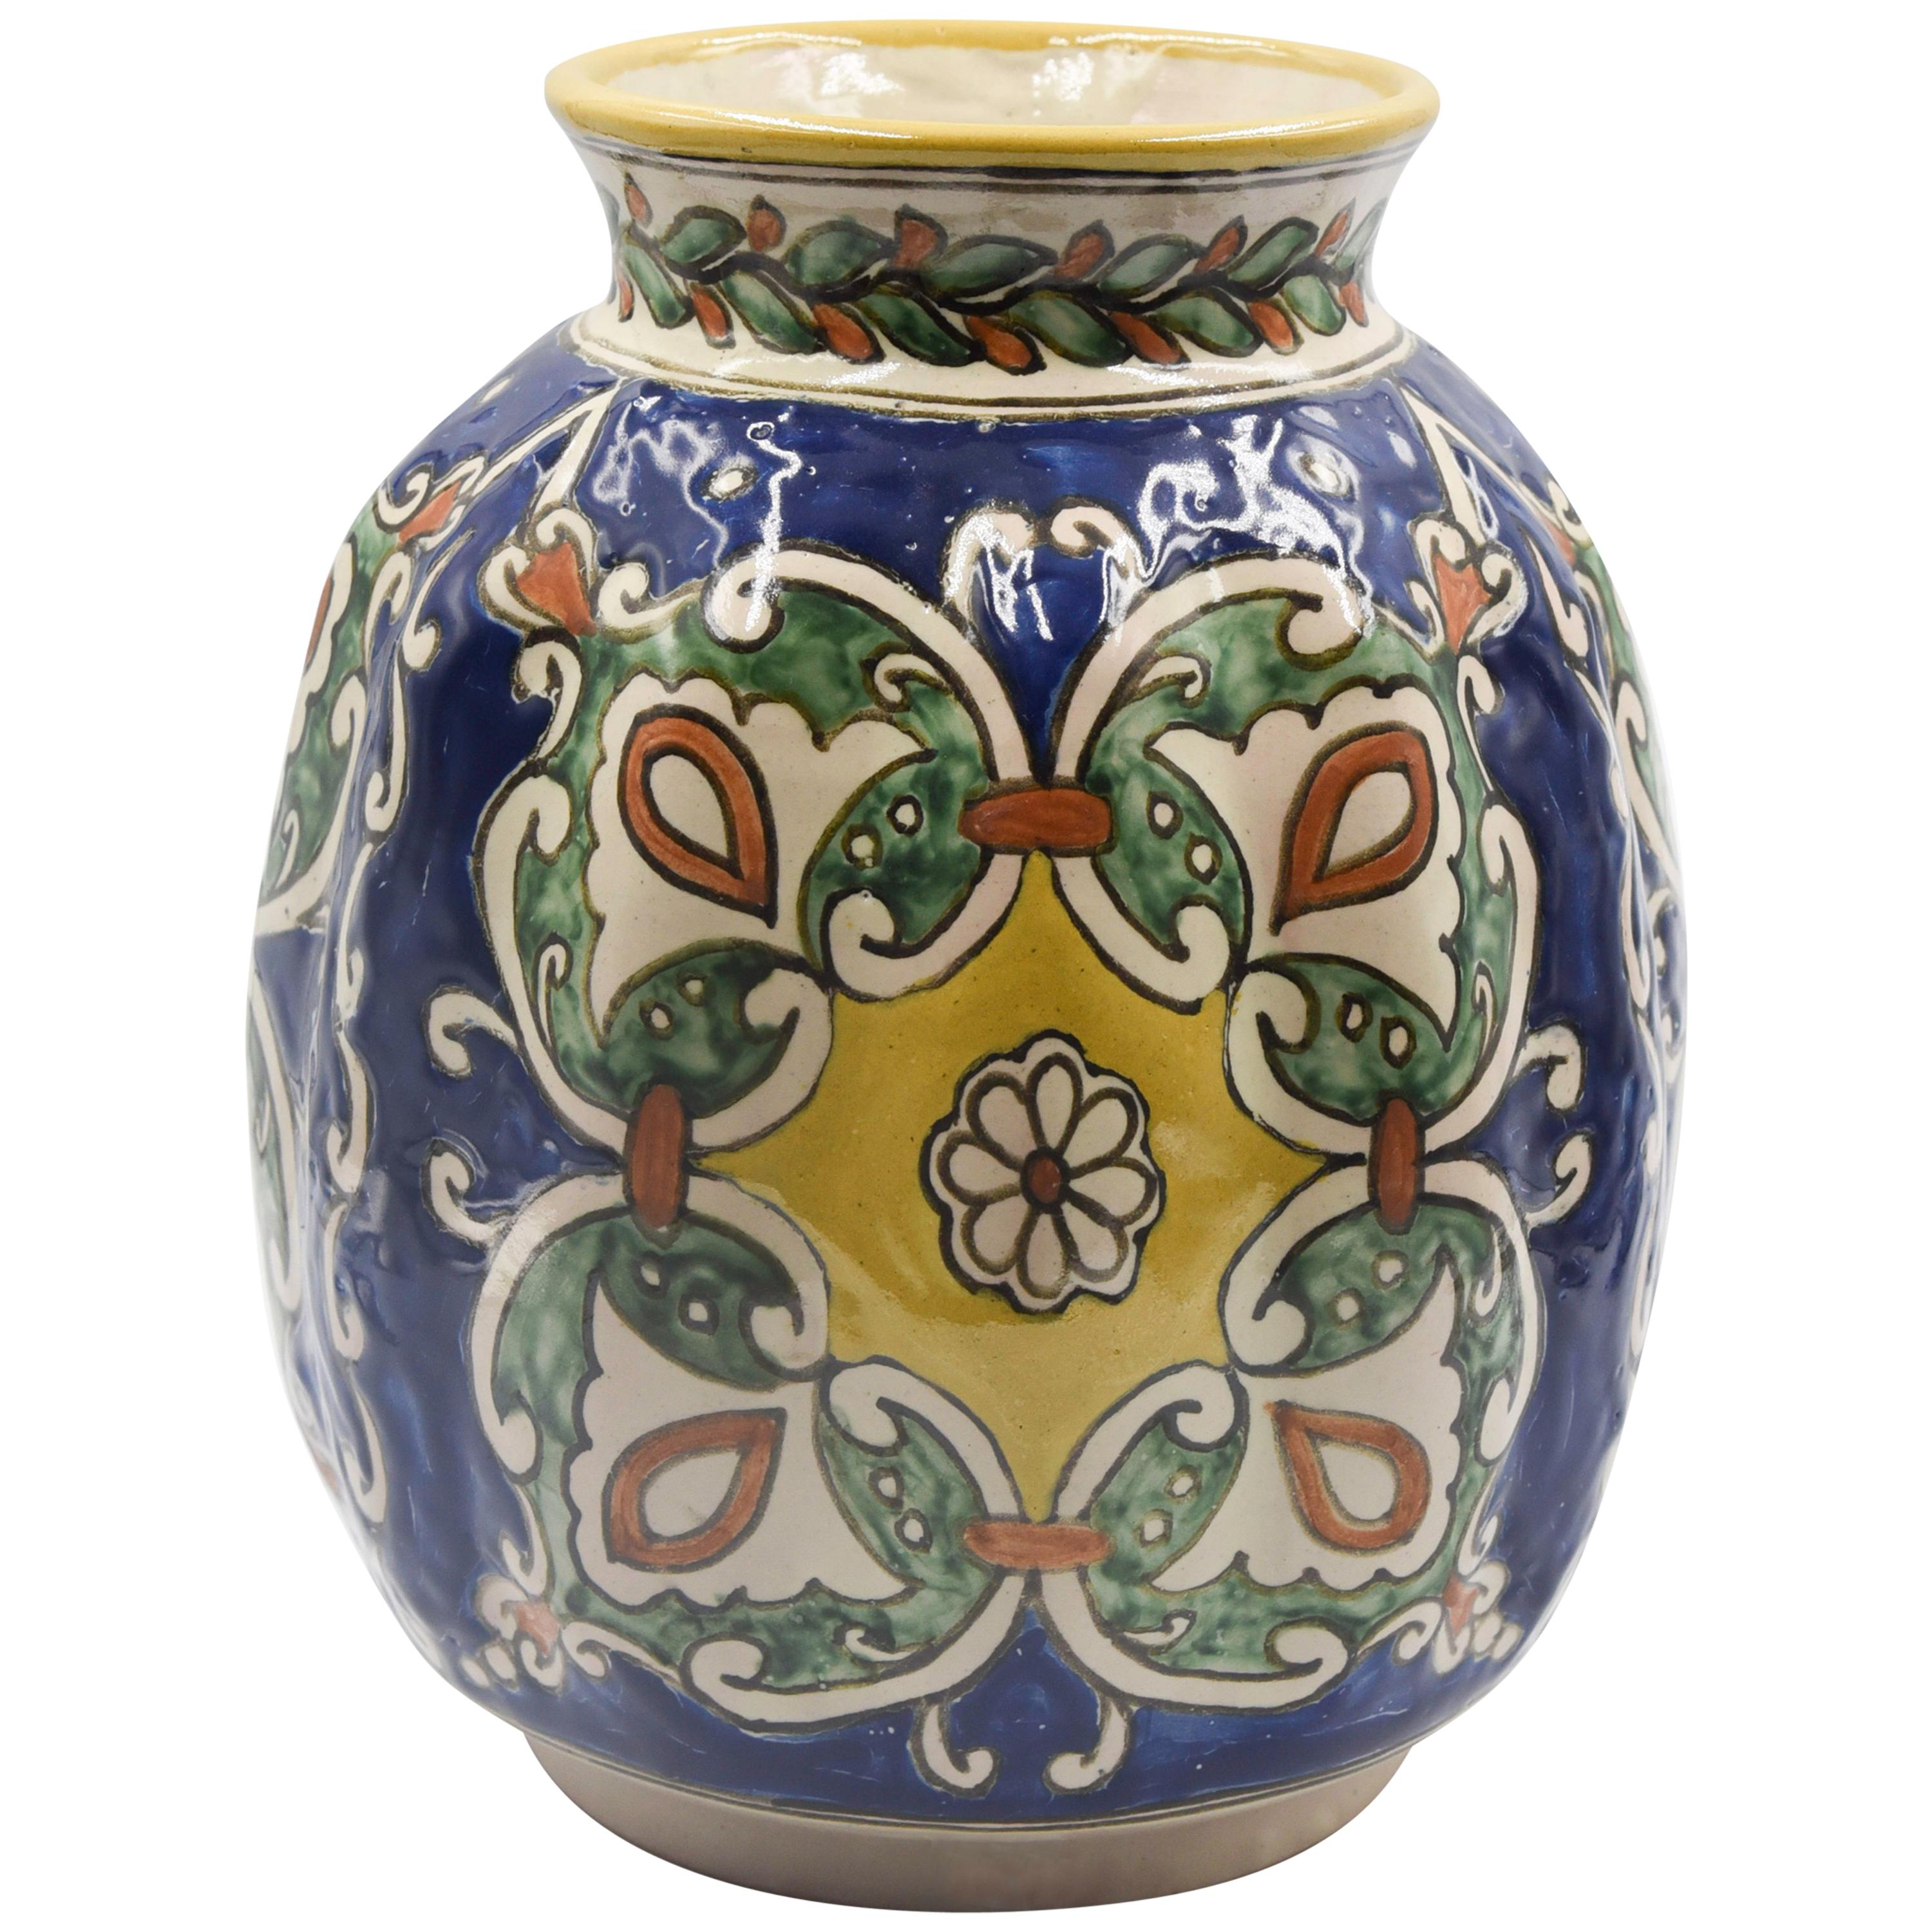 Authentic Talavera Decorative Vase Folk Art Vessel Mexican Ceramic Blue White